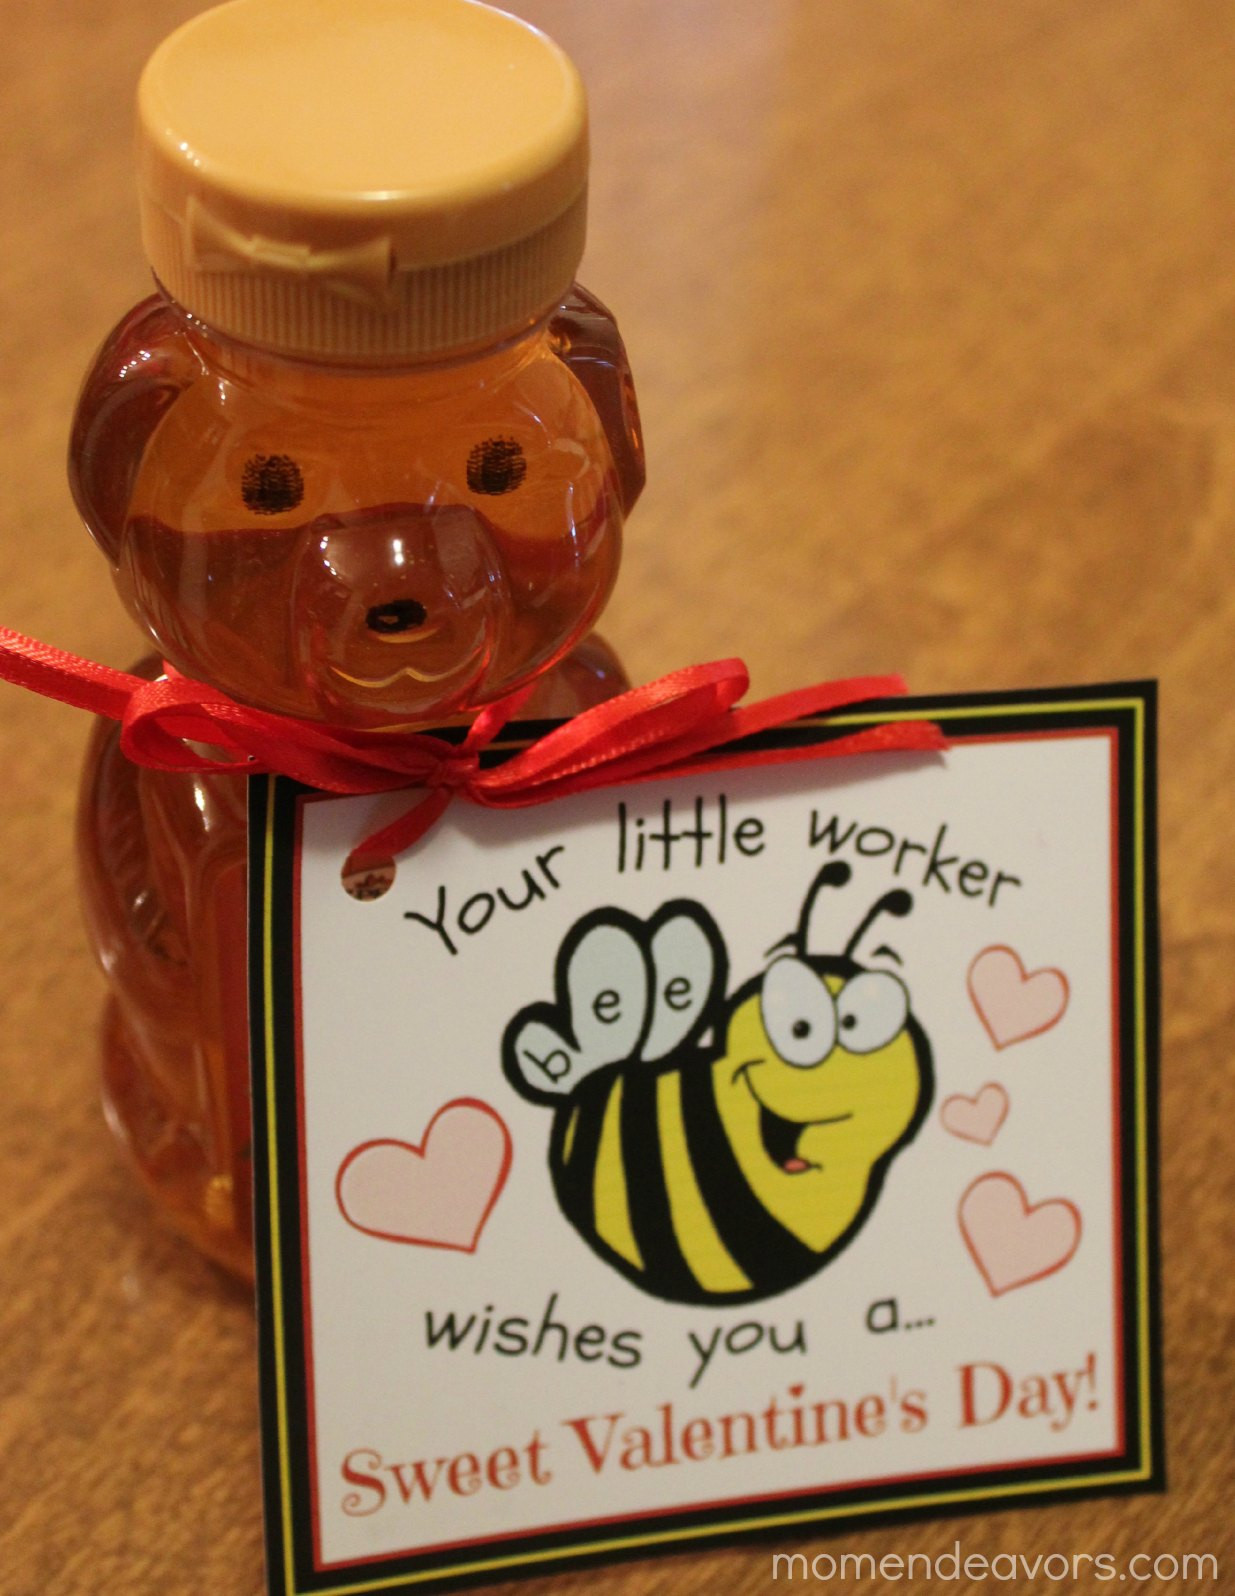 Teacher Valentines Gift Ideas
 Bee themed Teacher Valentine’s Gift